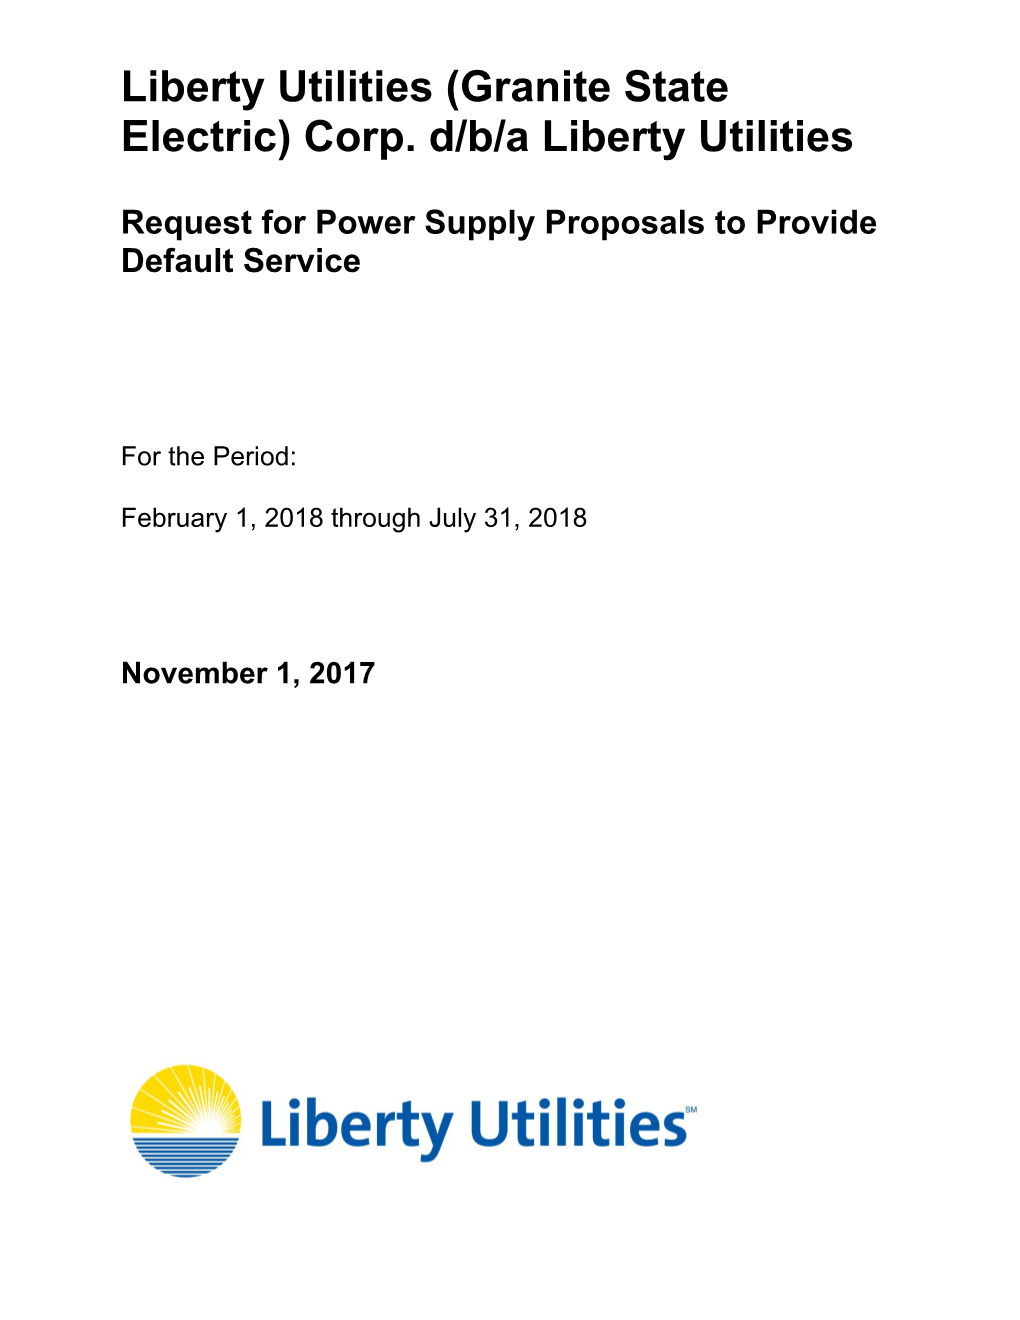 Liberty Utilities (Granite State Electric) Corp.D/B/A Liberty Utilities